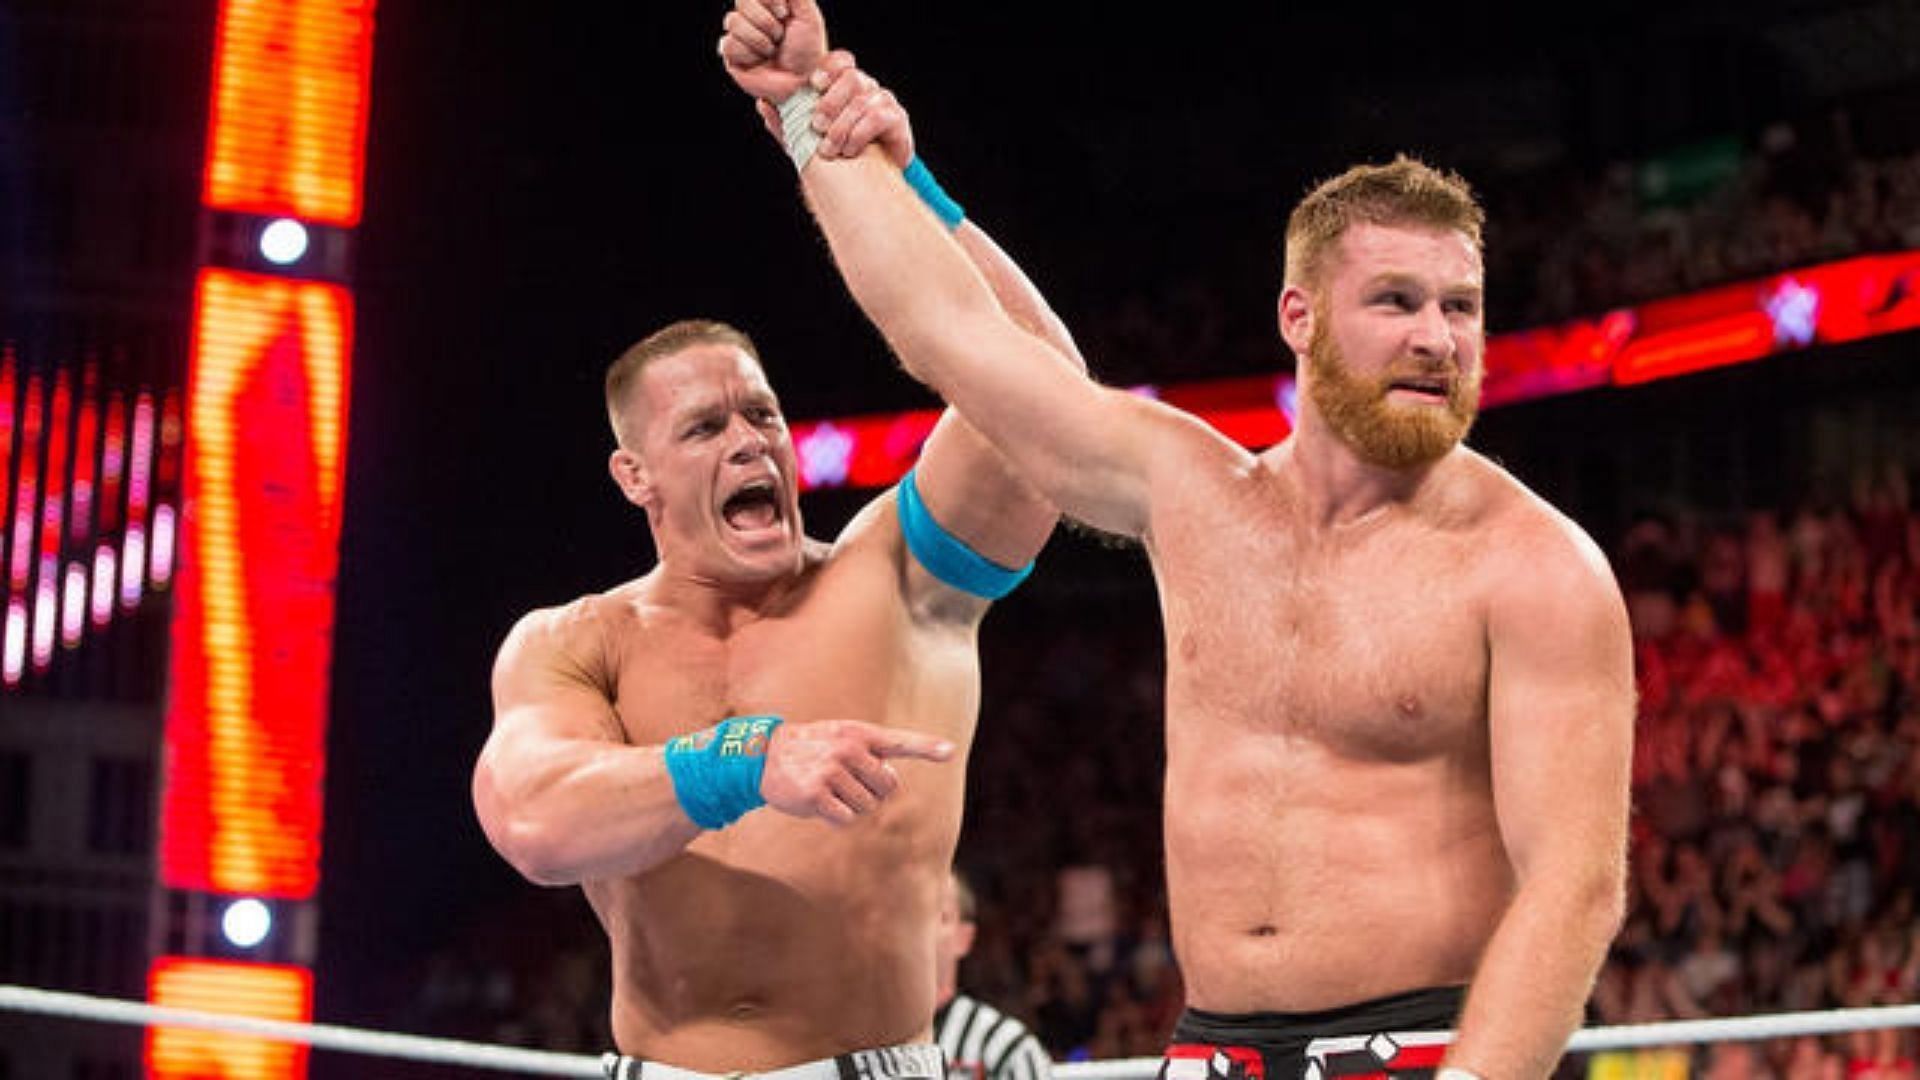 John Cena congratulates Sami Zayn for his valiant effort.